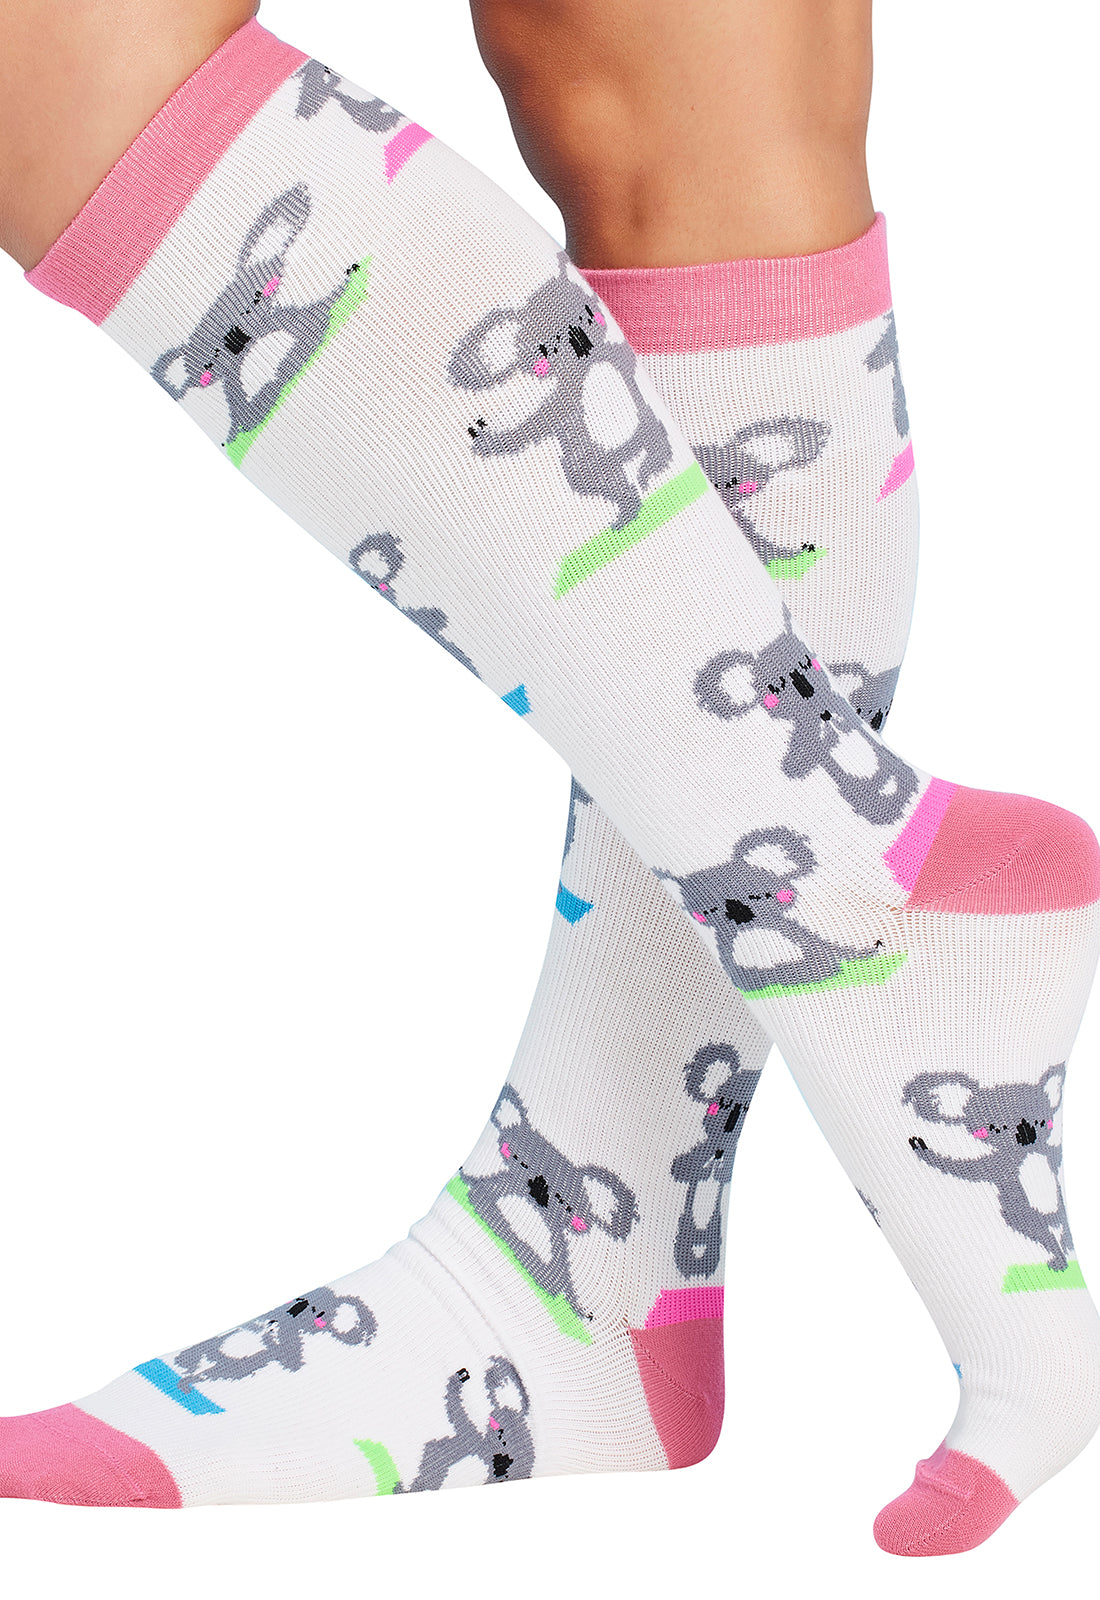 Regular Fit - Compression Socks 10-15mmHg Compression Socks Cherokee Legwear Yoga Koala  